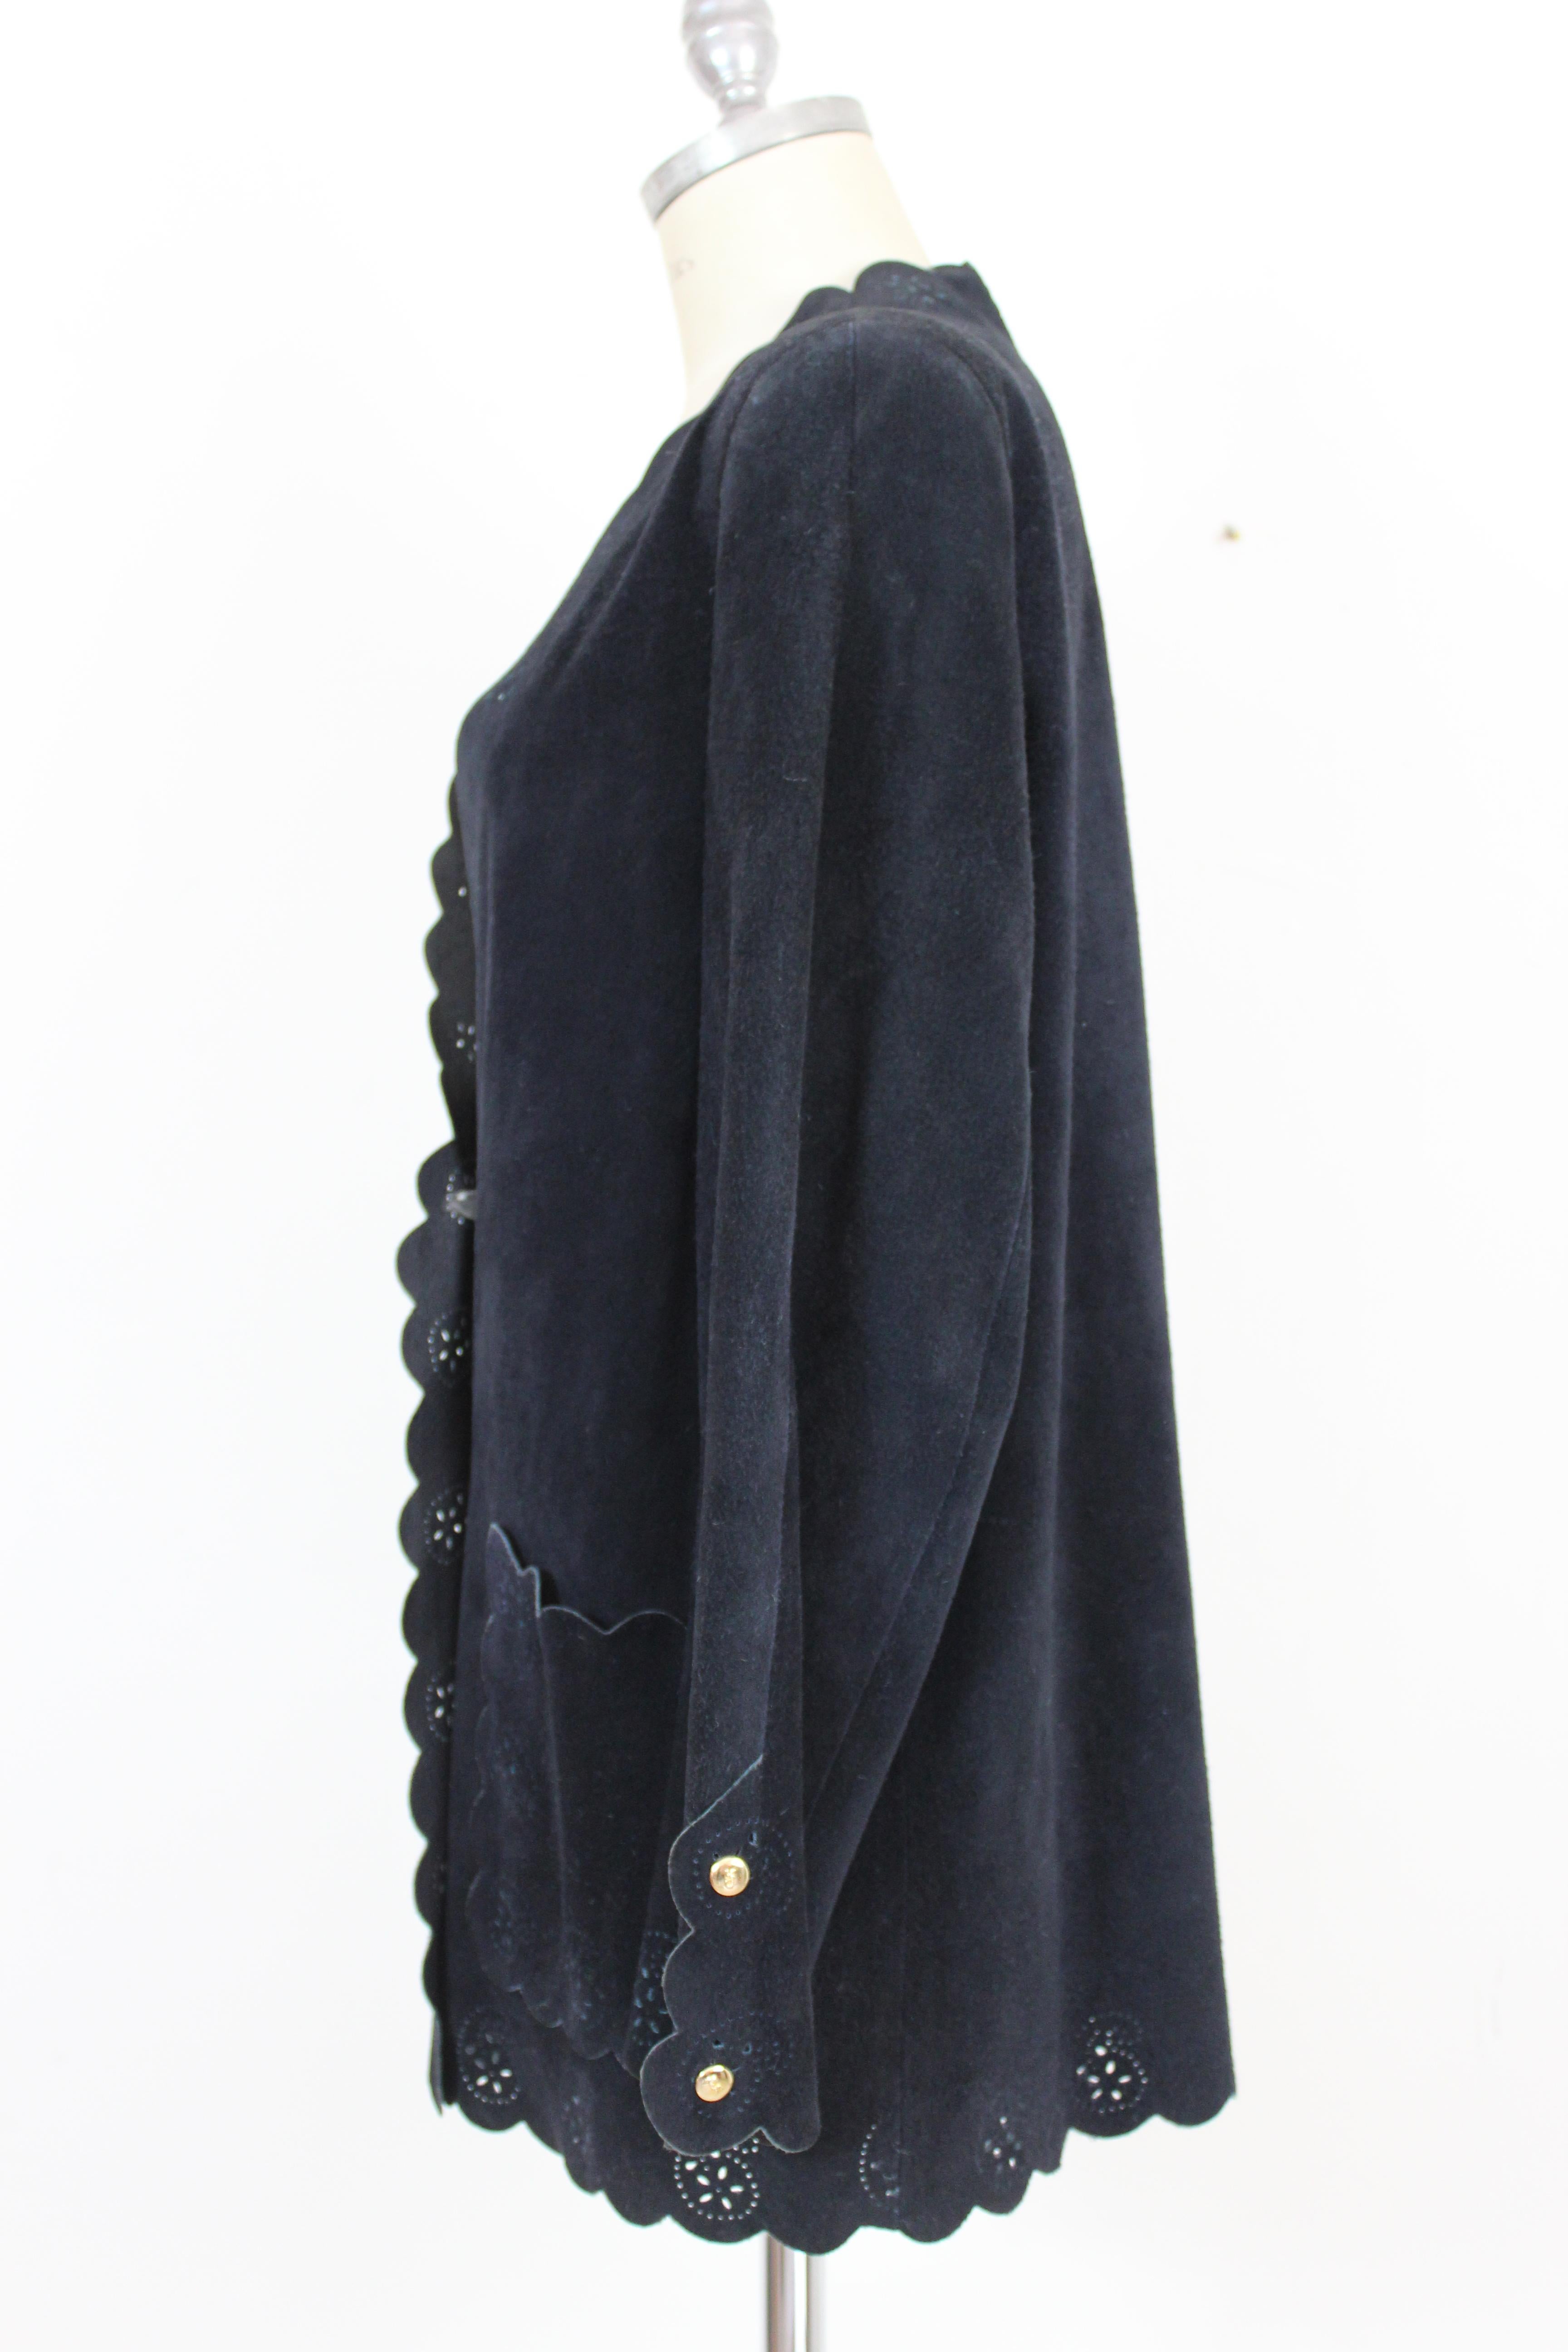 Black Roberta di Camerino Blu Leather Suede Jacket 1980s